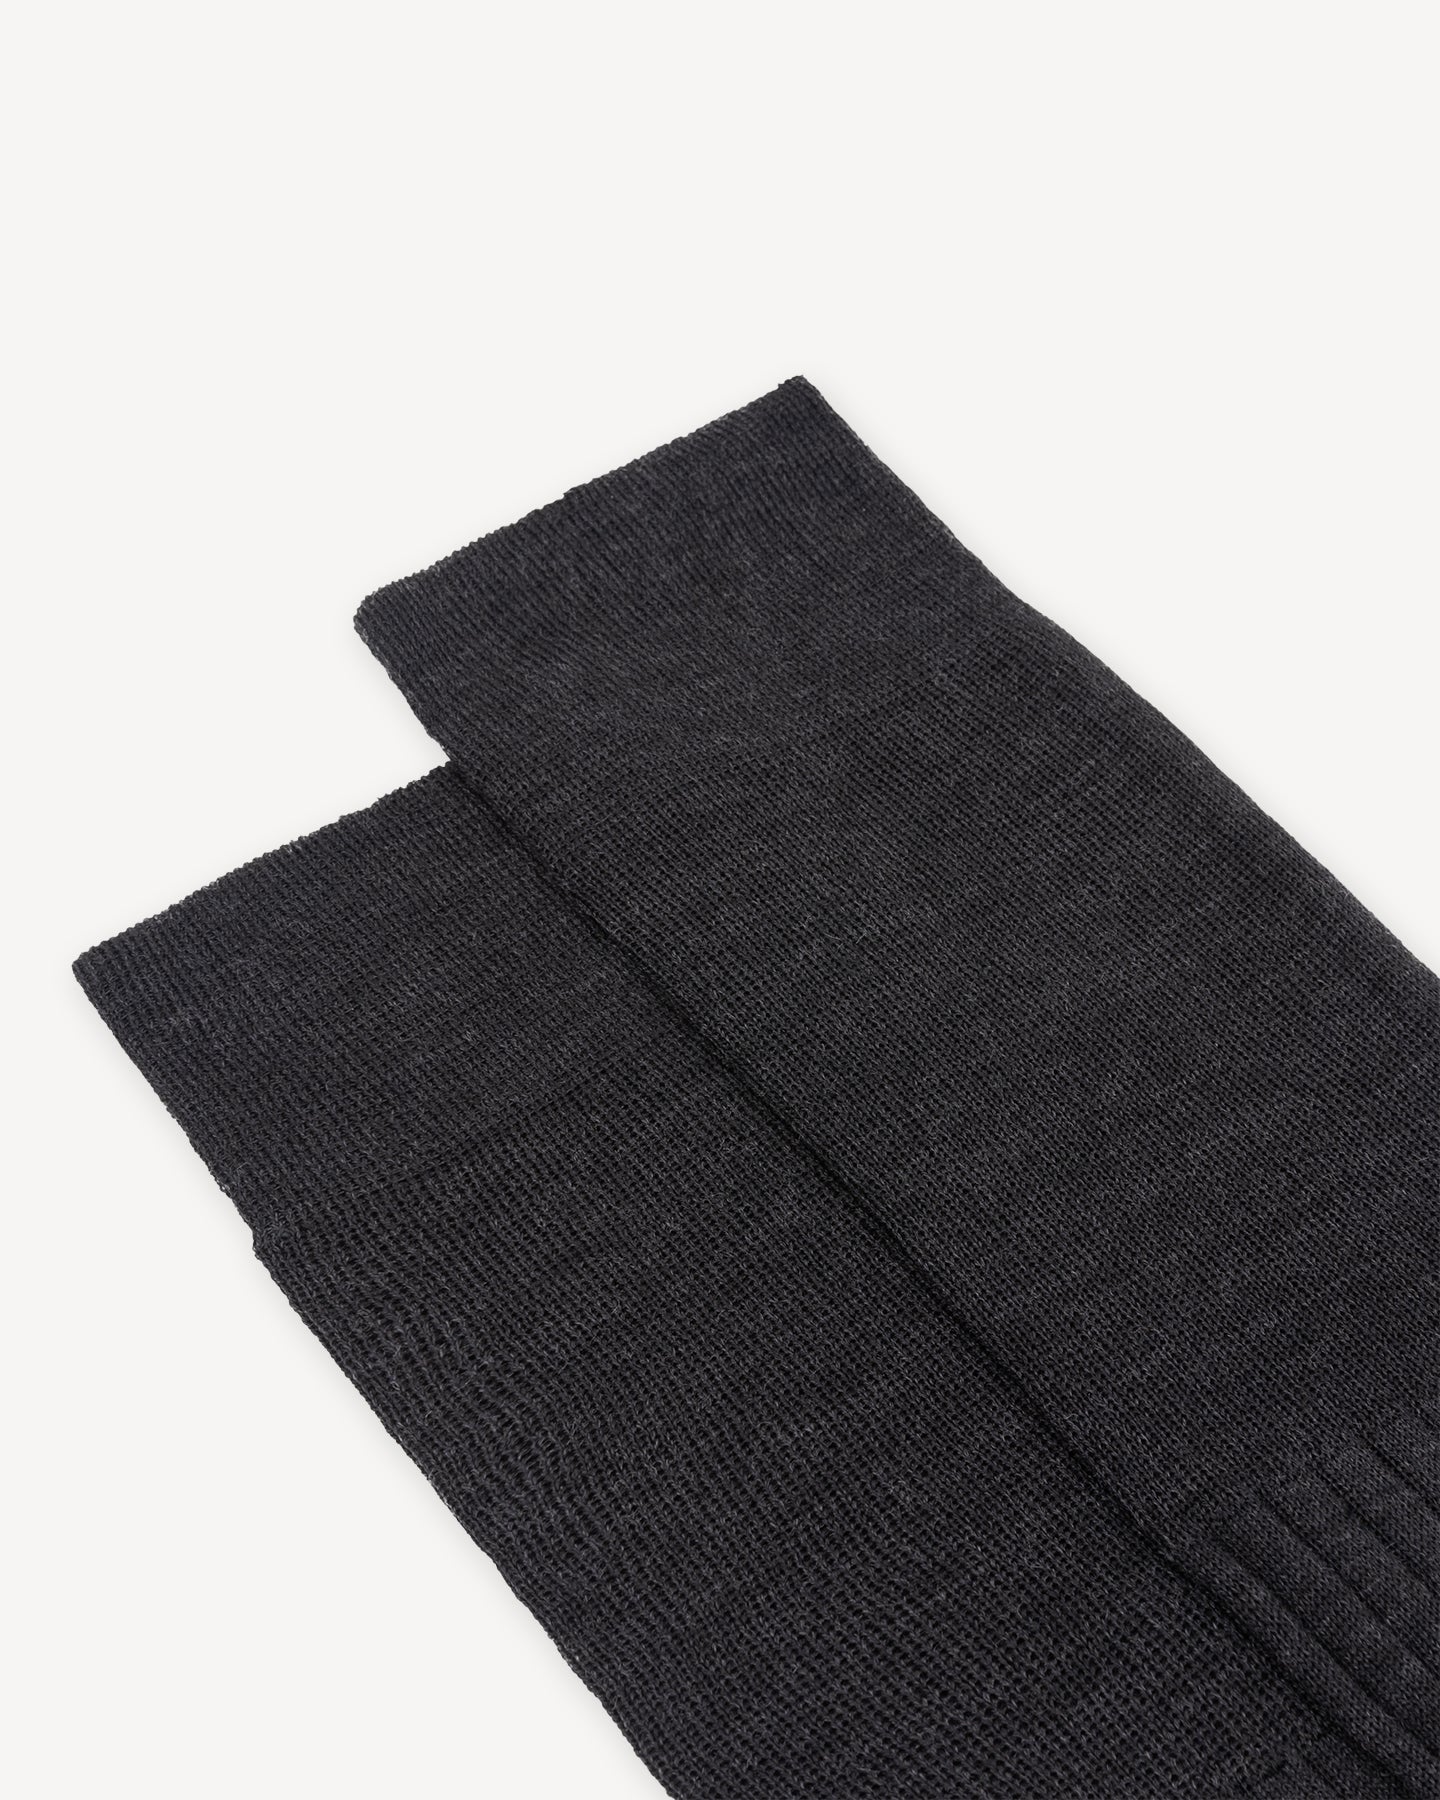 Charcoal knee high socks made from Australian merino wool